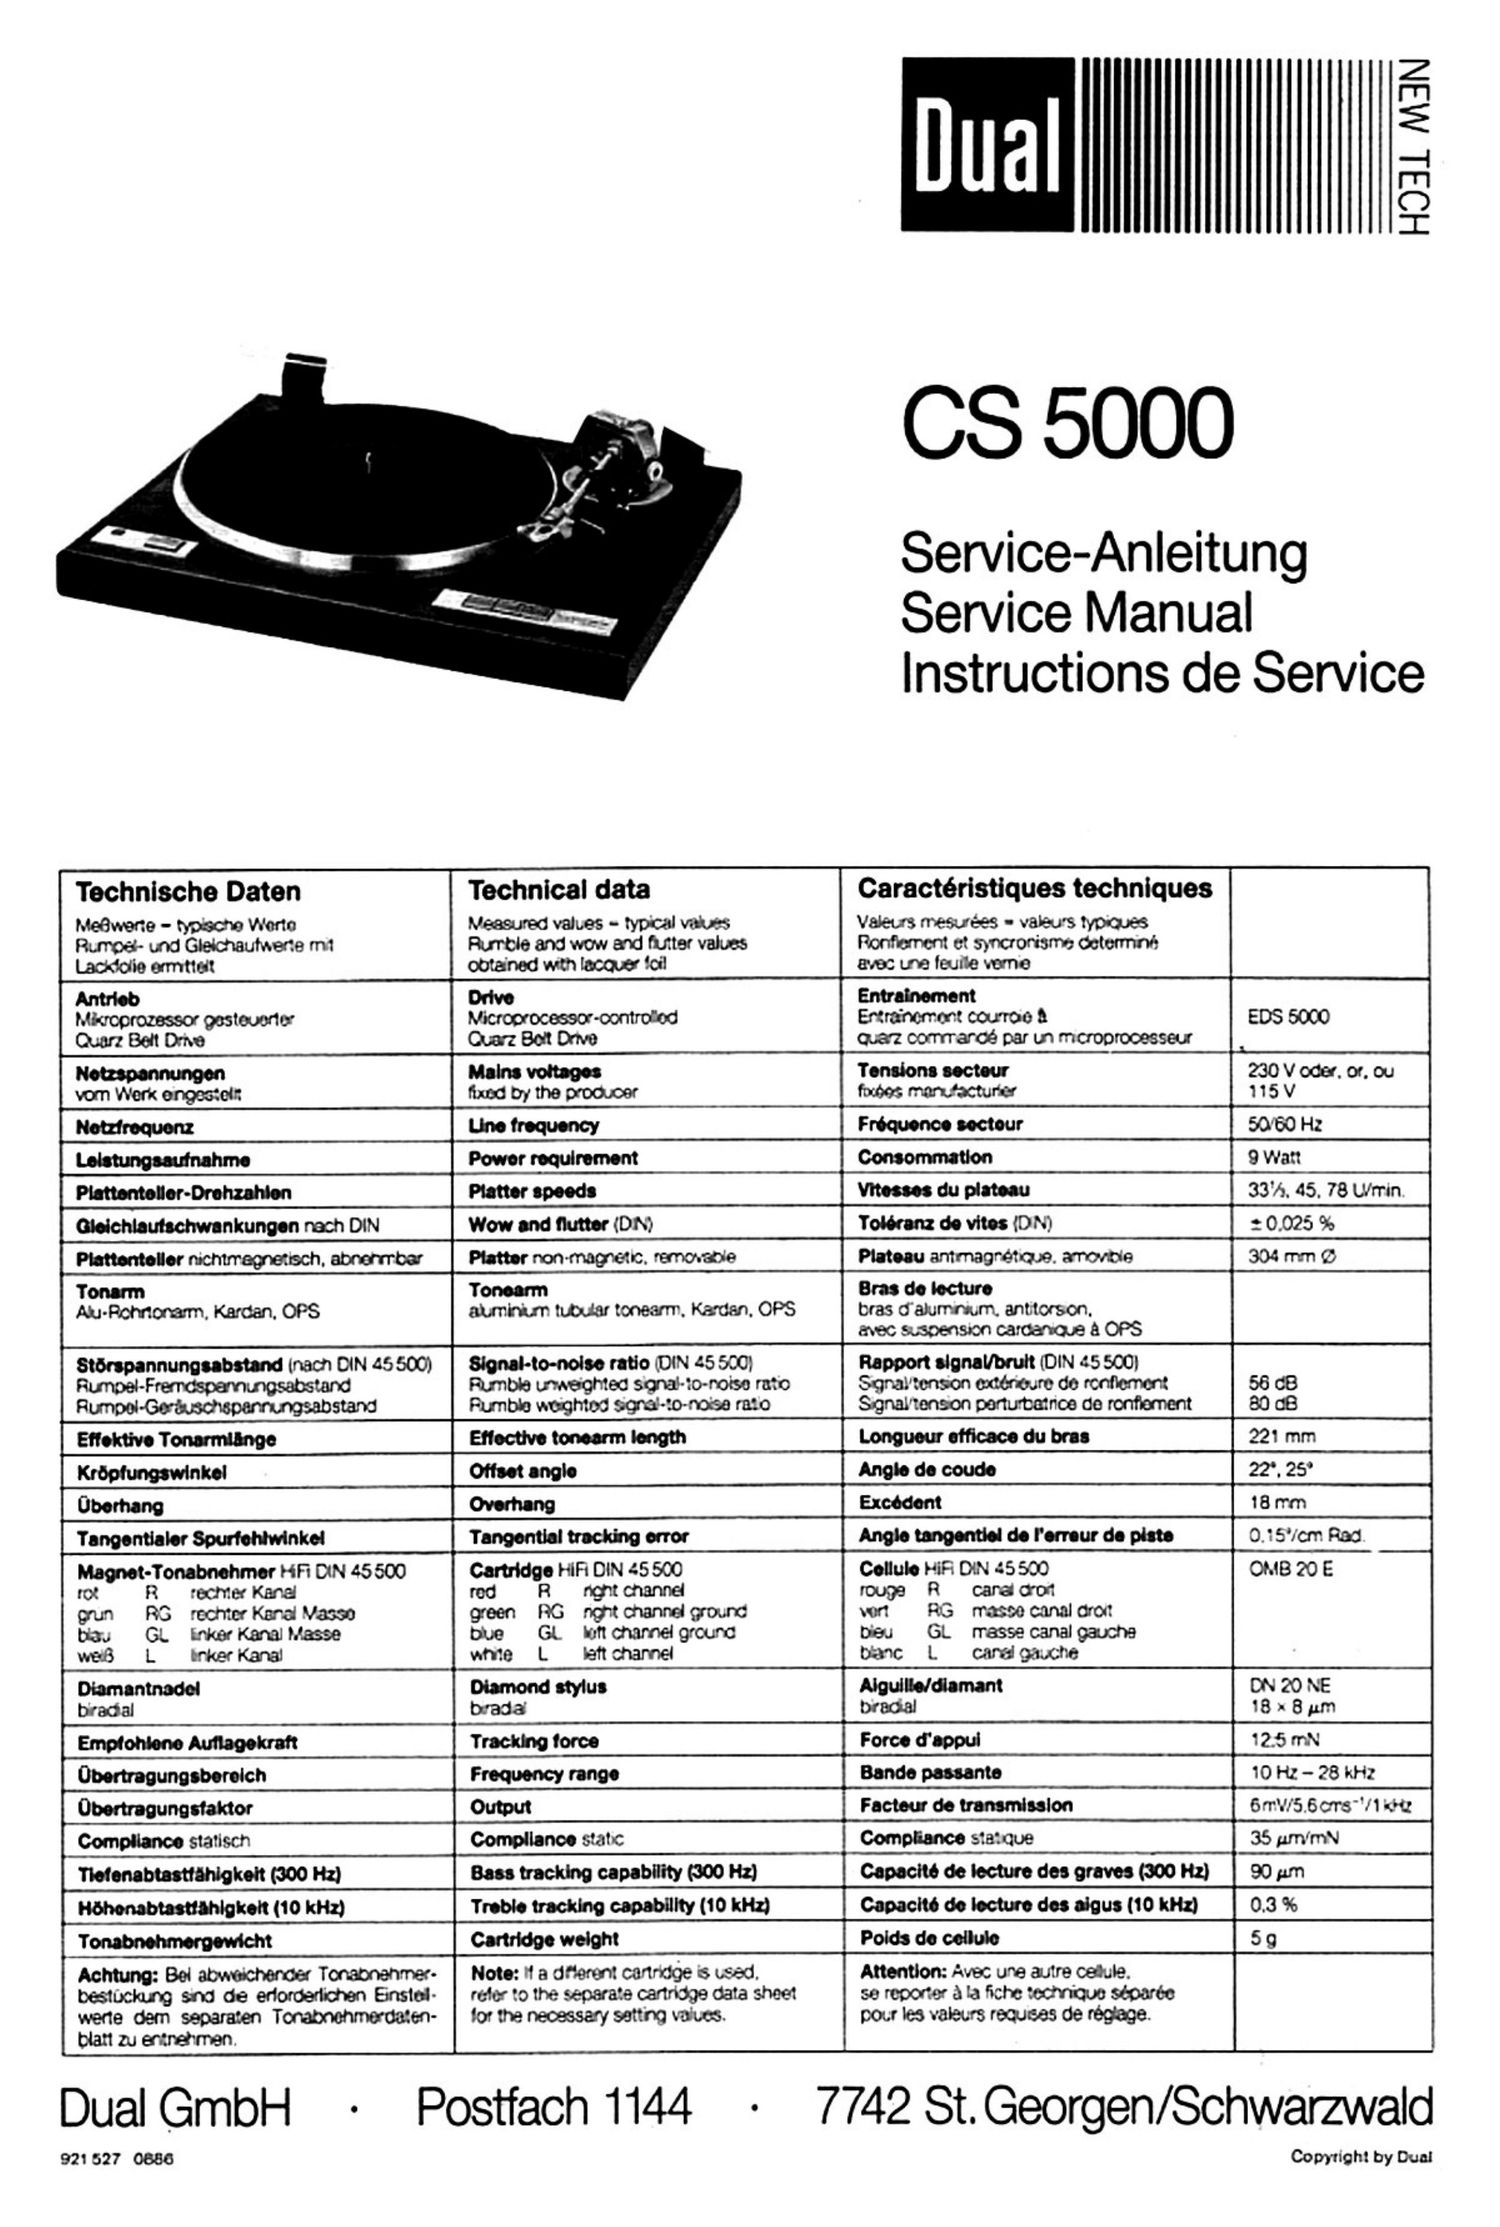 Dual CS 5000 Service Manual 2